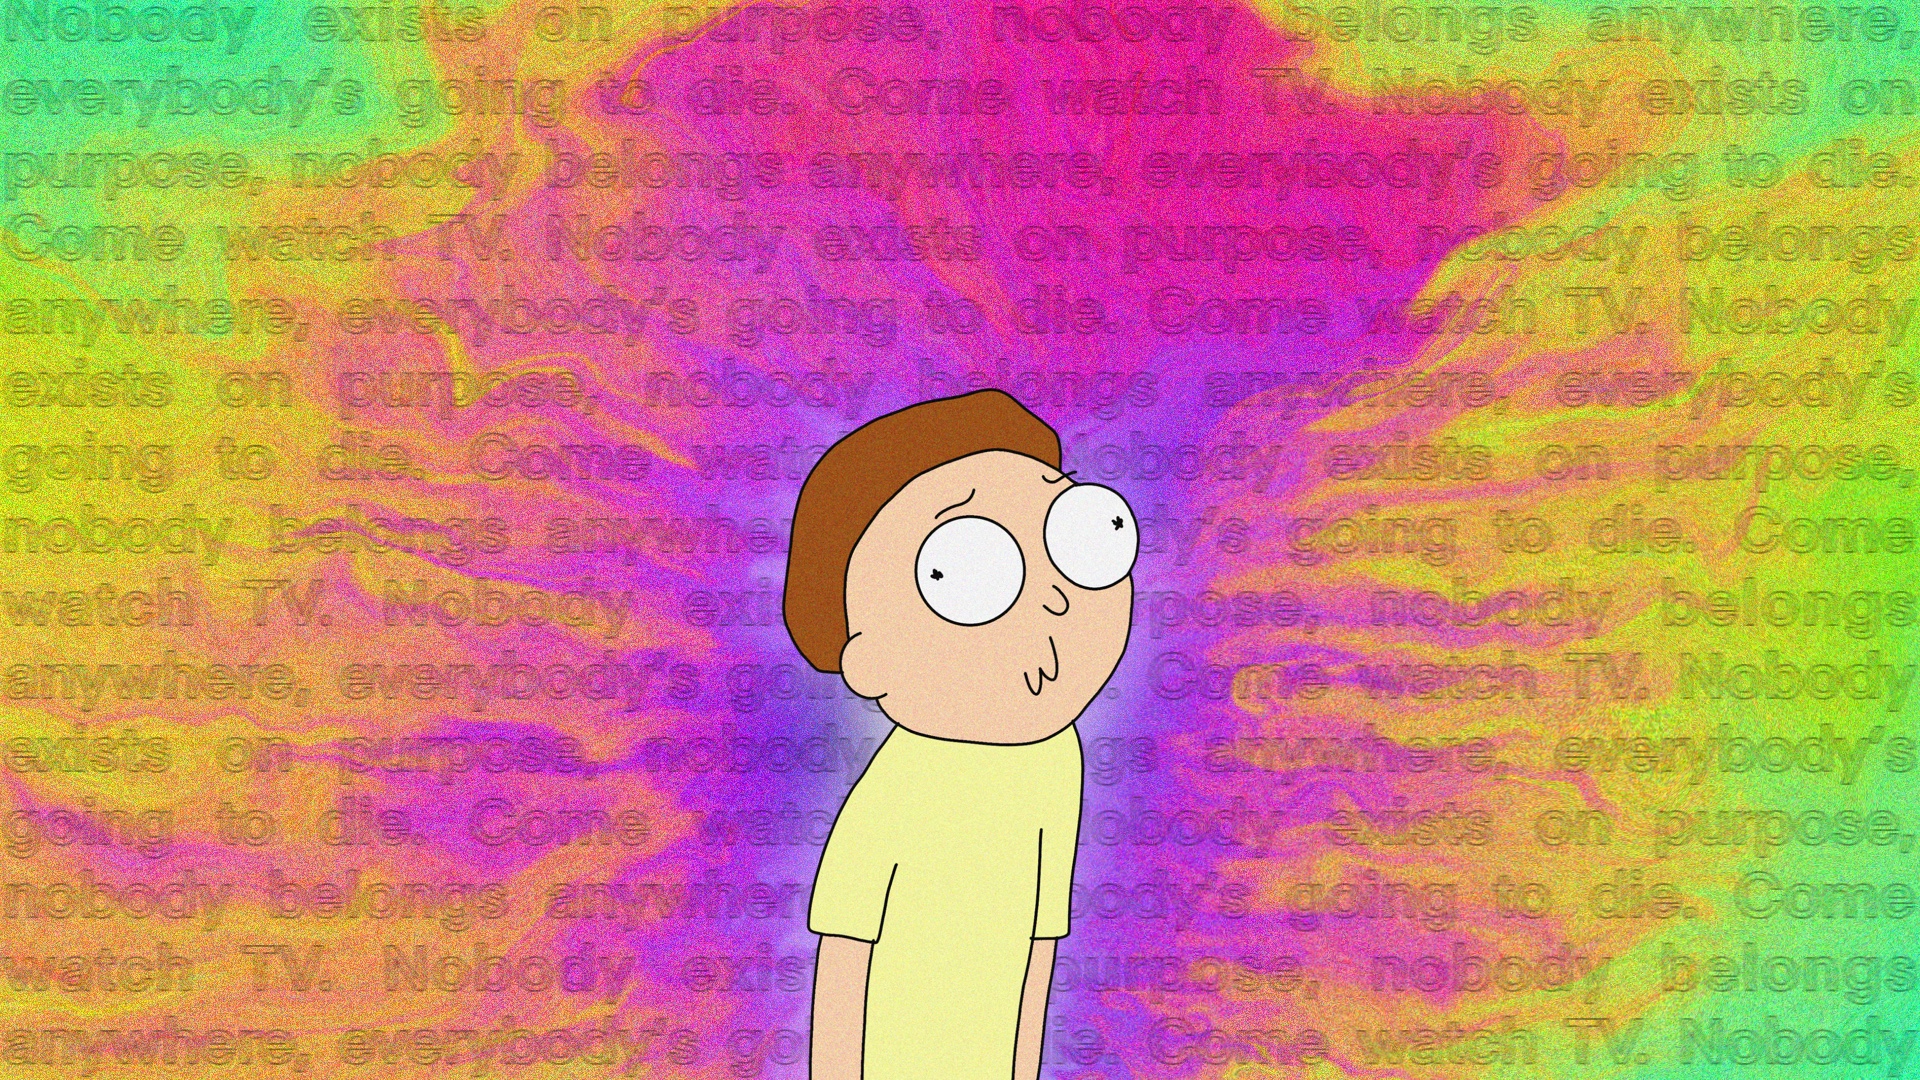 Rick and Morty Windows 11/10 Theme 